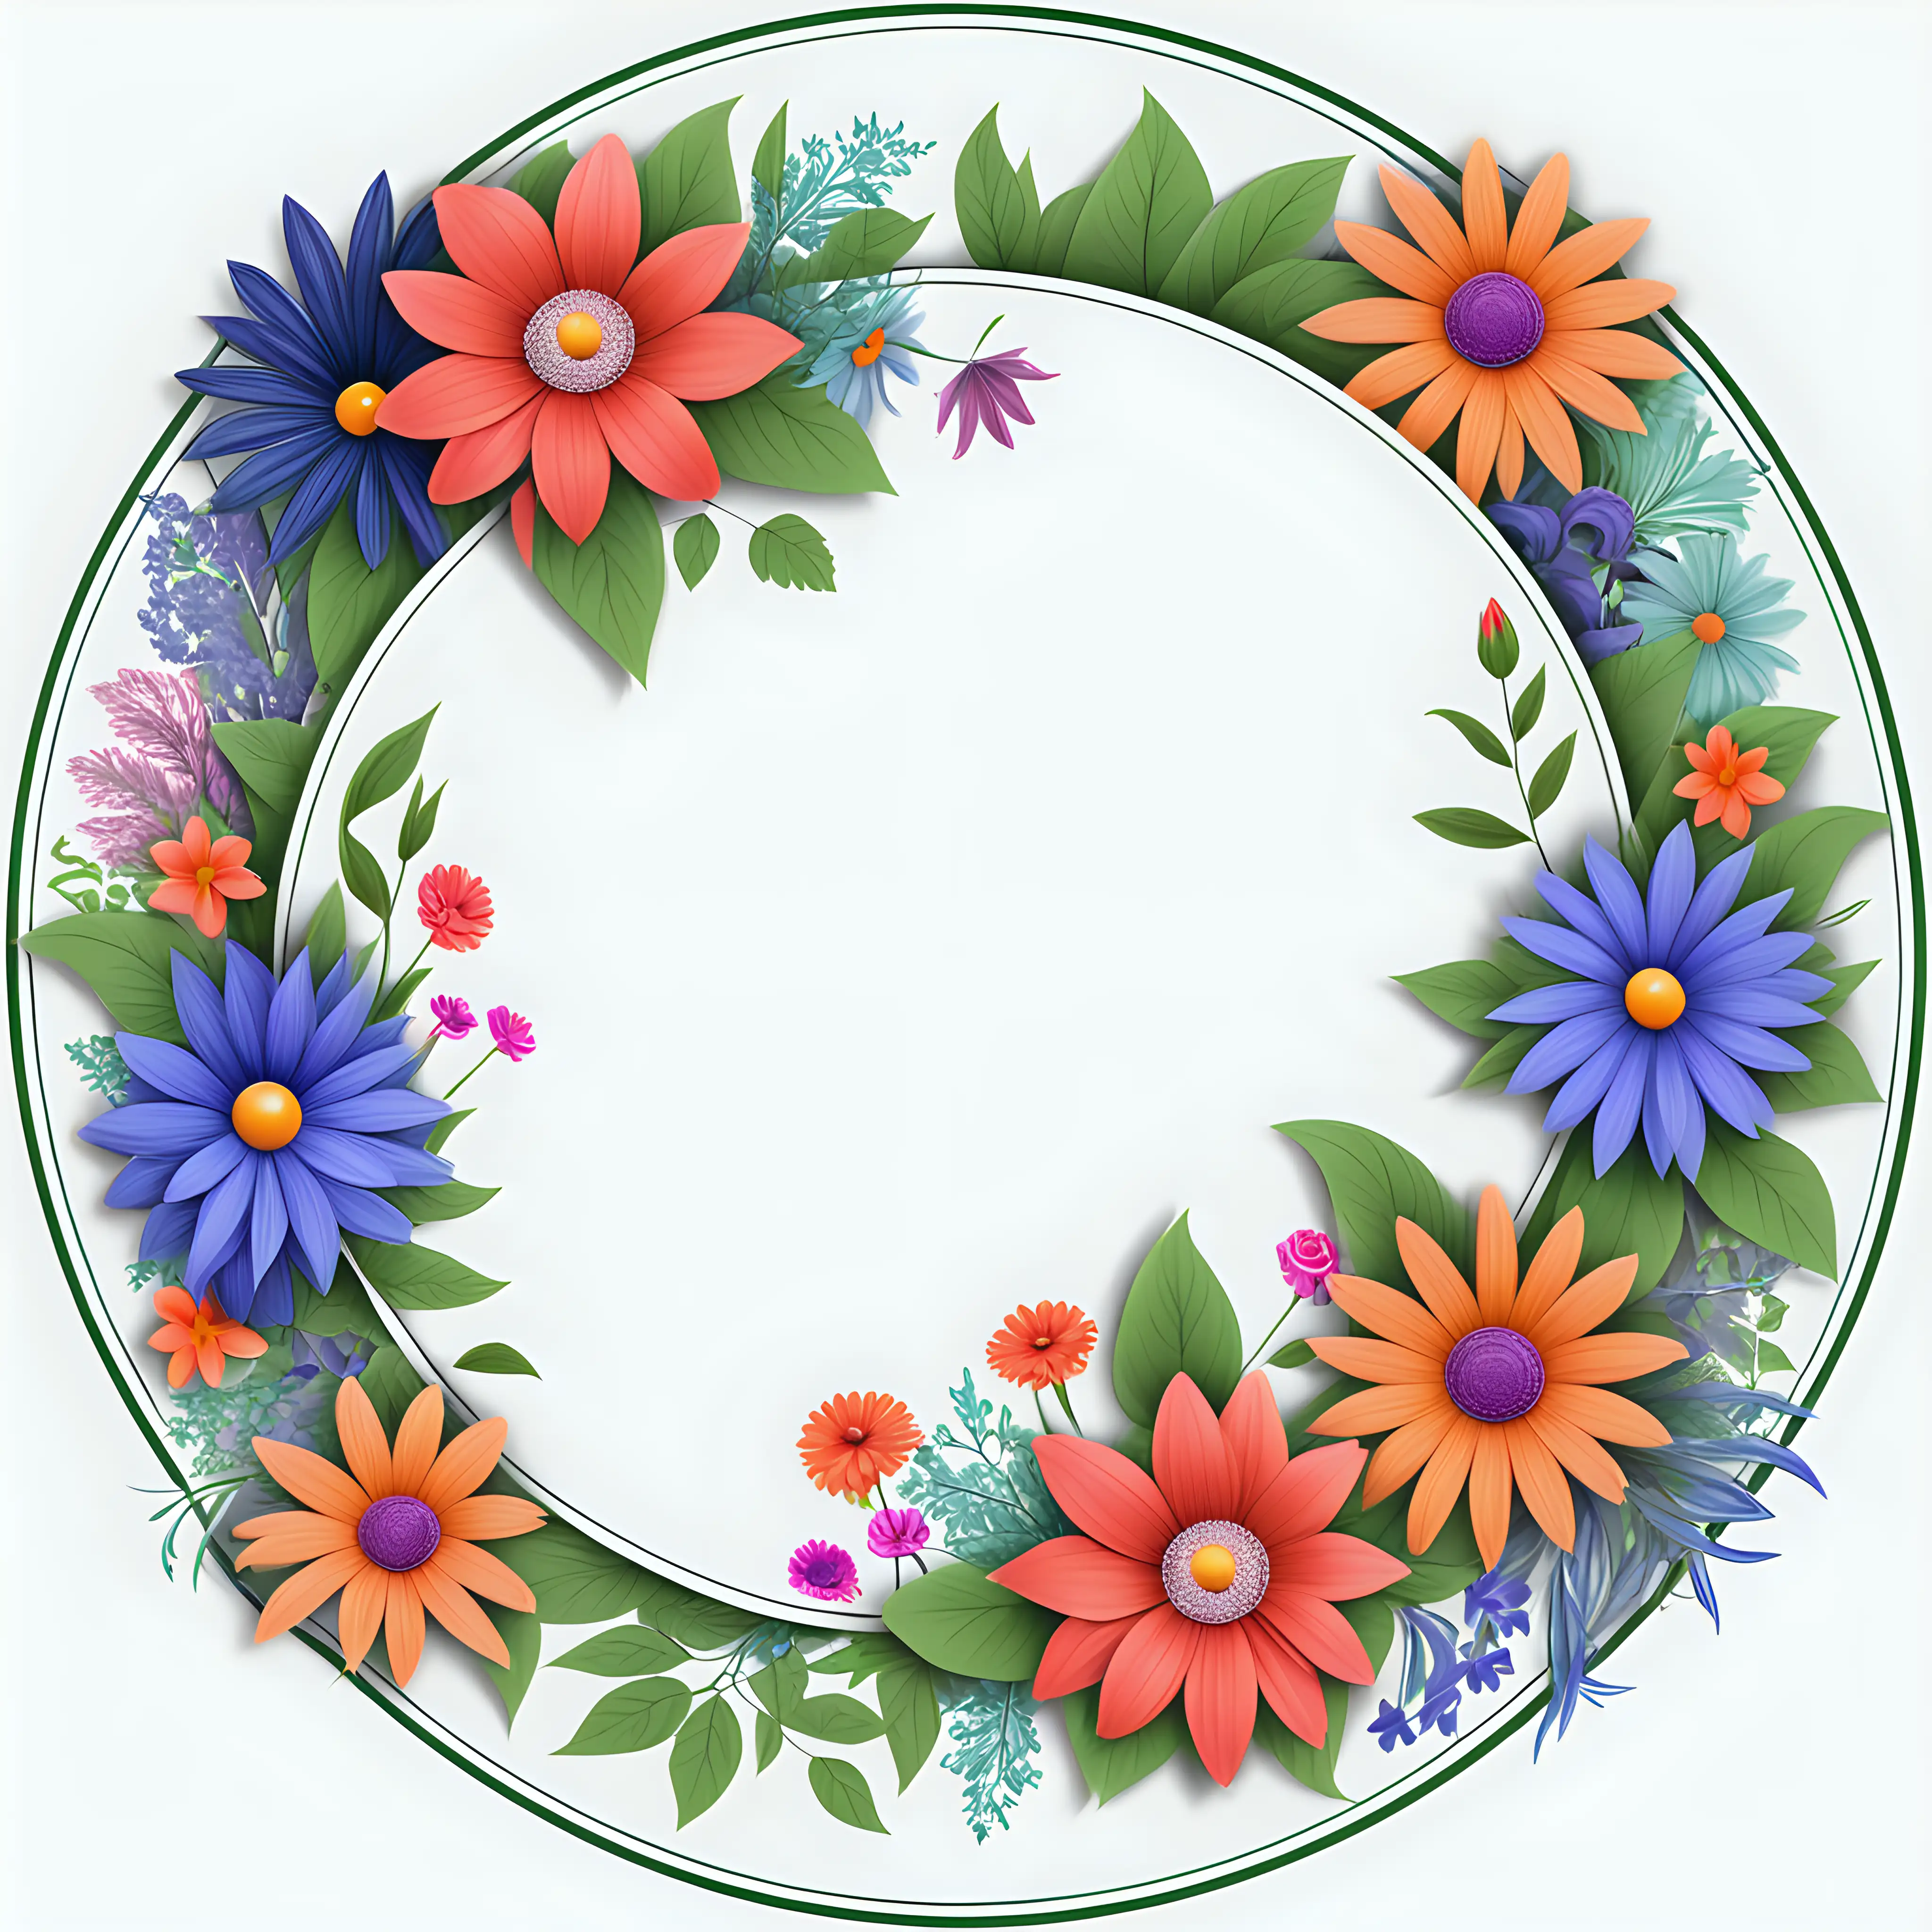 Elegant Circular Floral Border Design